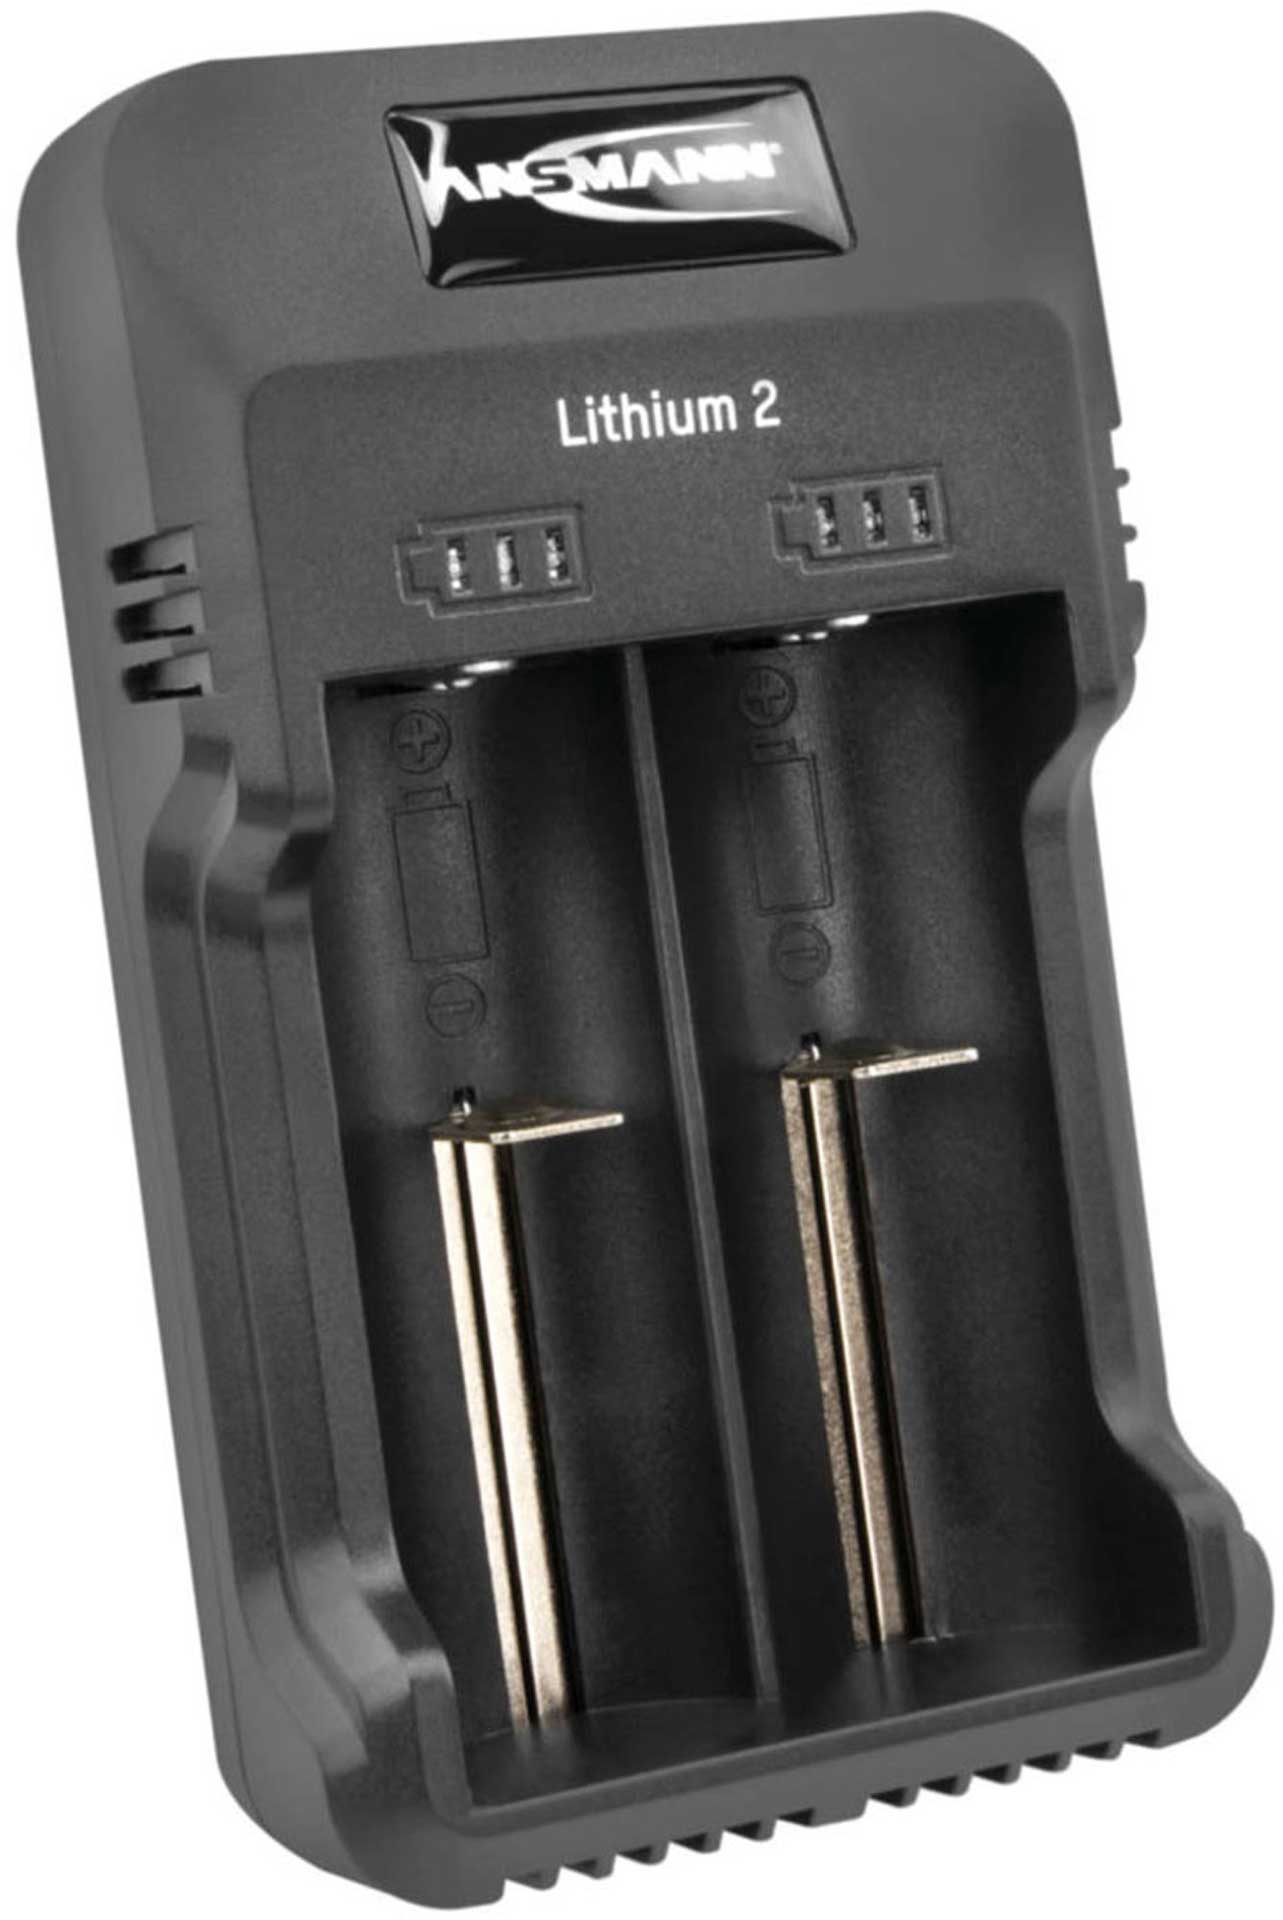 ANSMANN LITHIUM 2 CHARGER 1-2 LI-ON BATTERIES OR NIMH, USB POWER SUPPLY